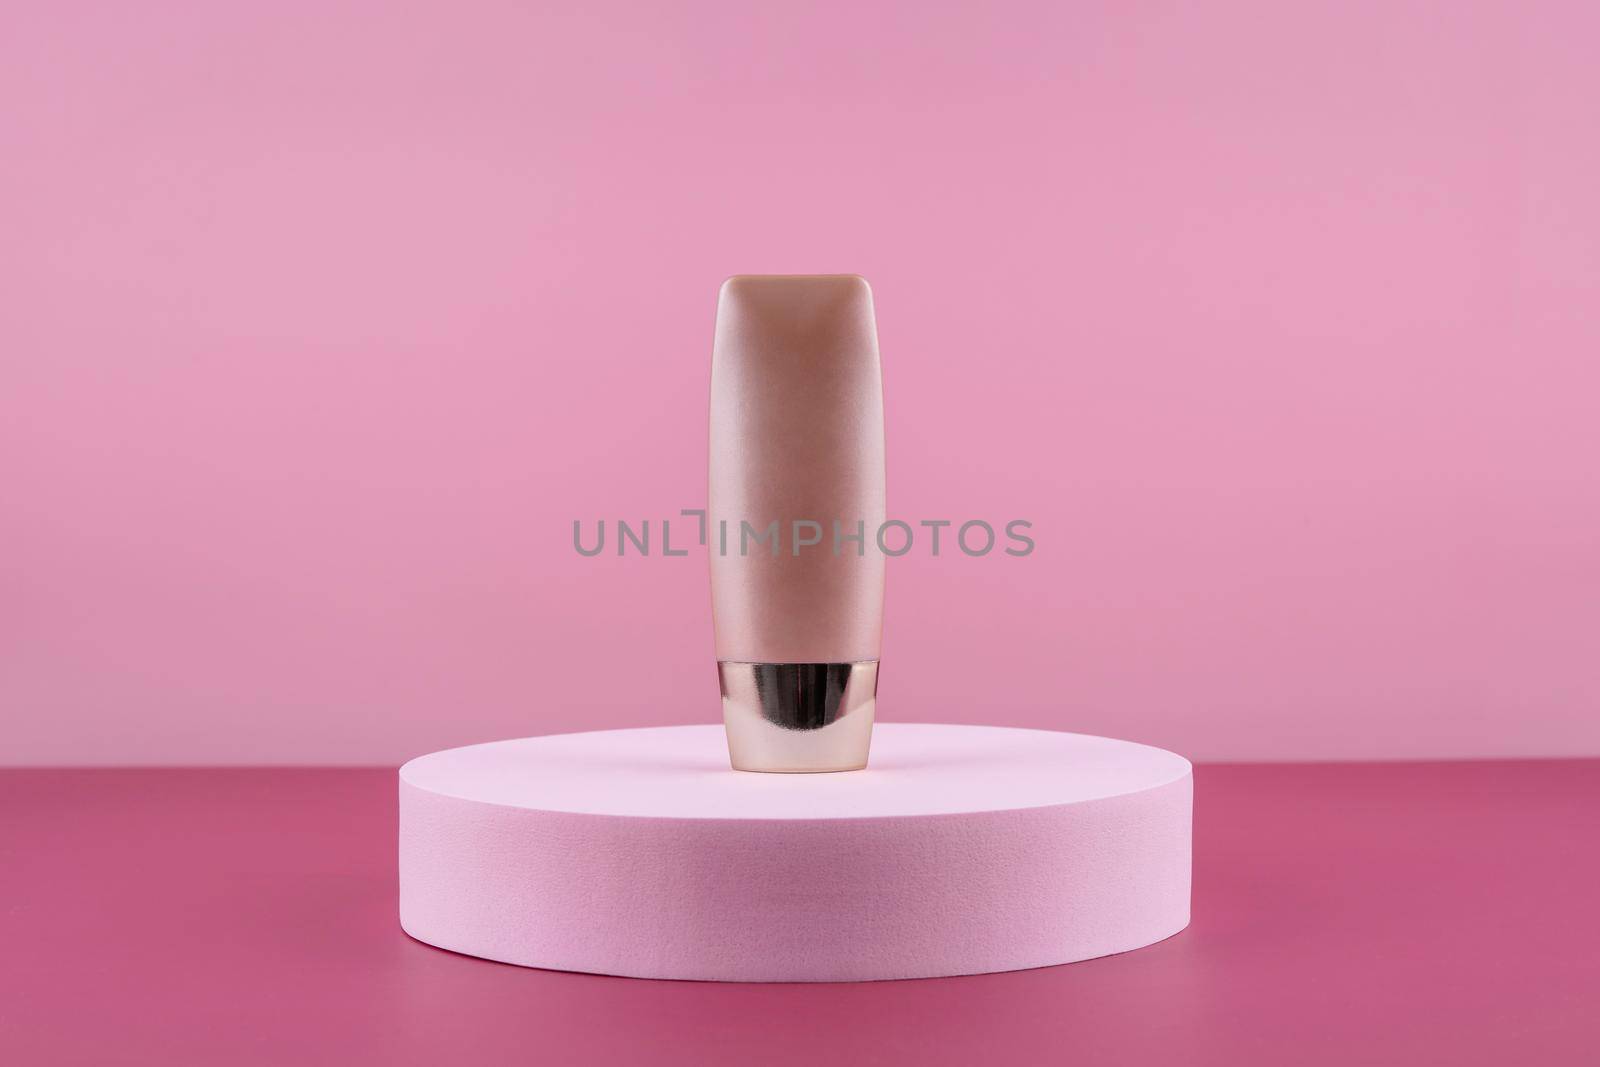 Beige concealer base cosmetics product mock up on pink background. Cosmetic liquid foundation nude cream bottle mockup on round podium pedestal. Skincare beauty primer, bb cc corrector